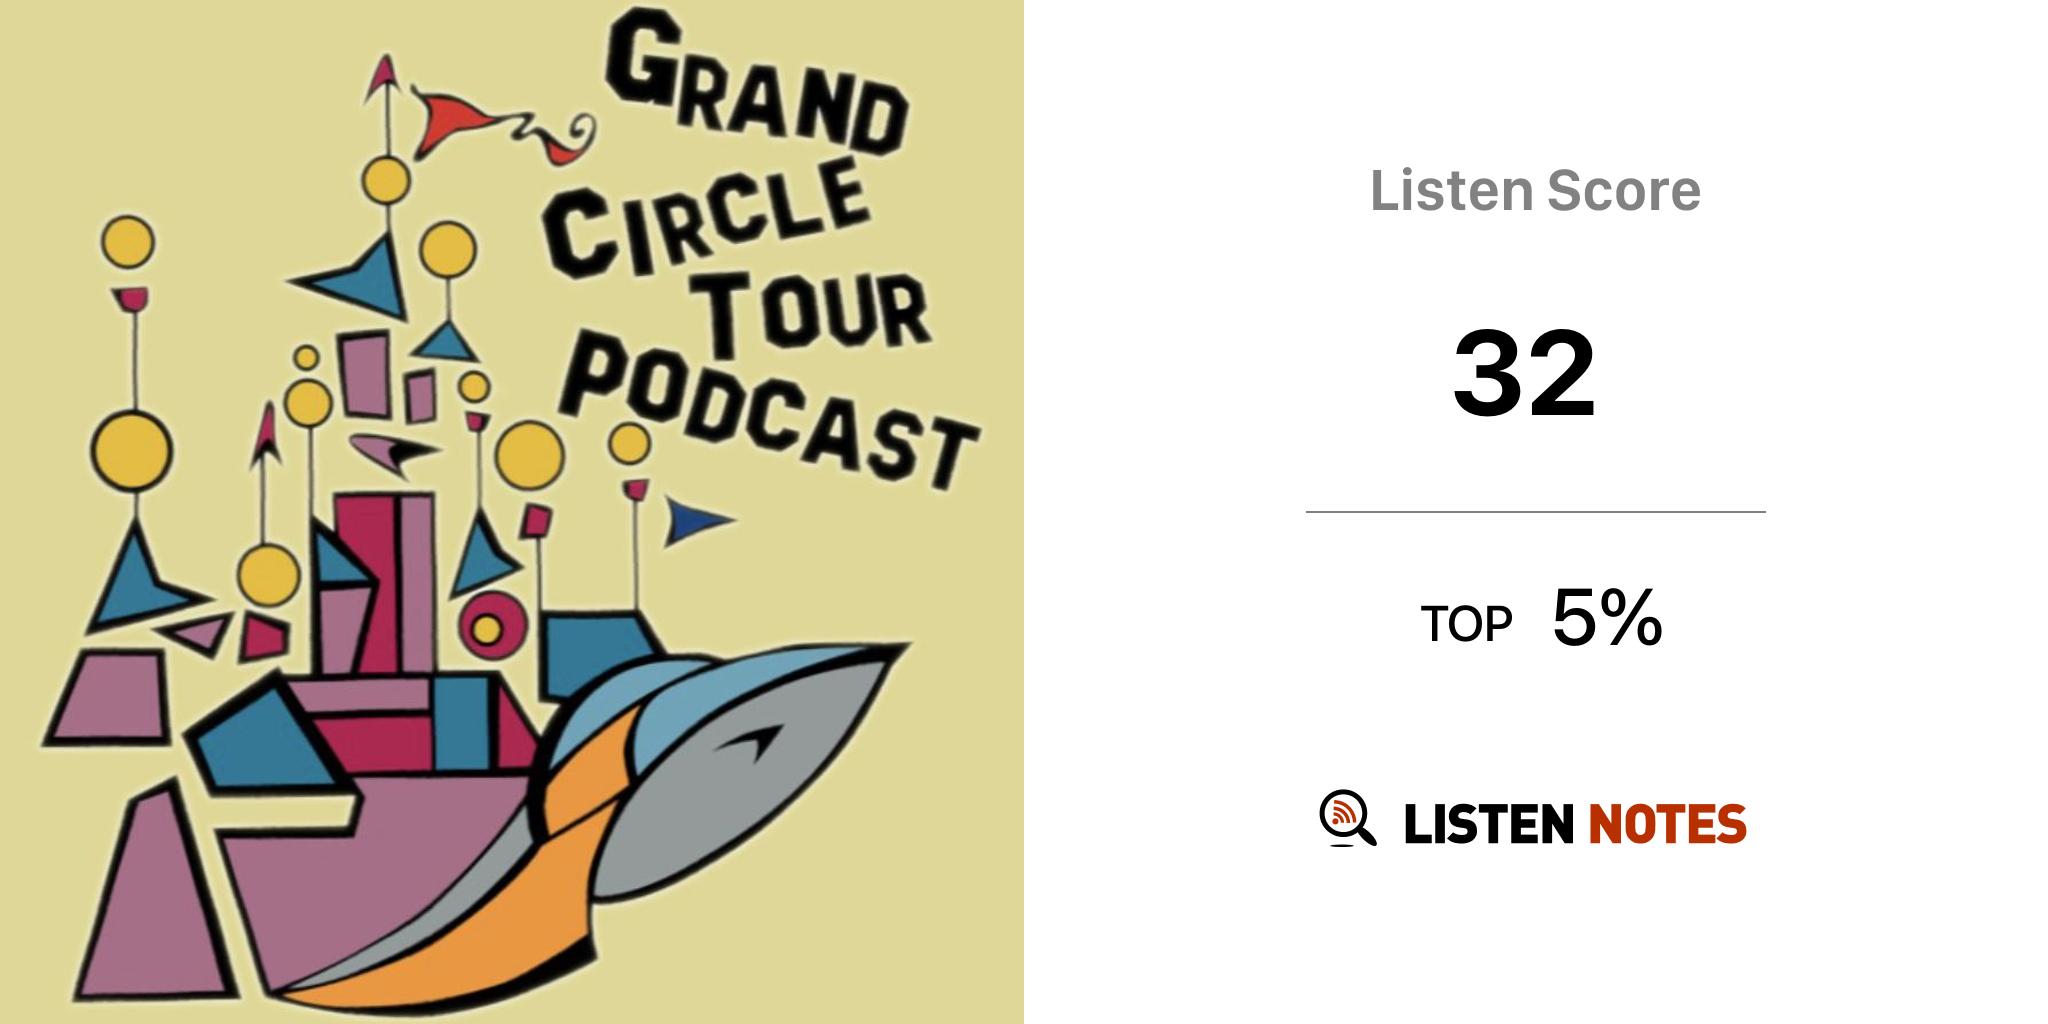 Grand Circle Tour Podcast - Your Tour Guides | Listen Notes